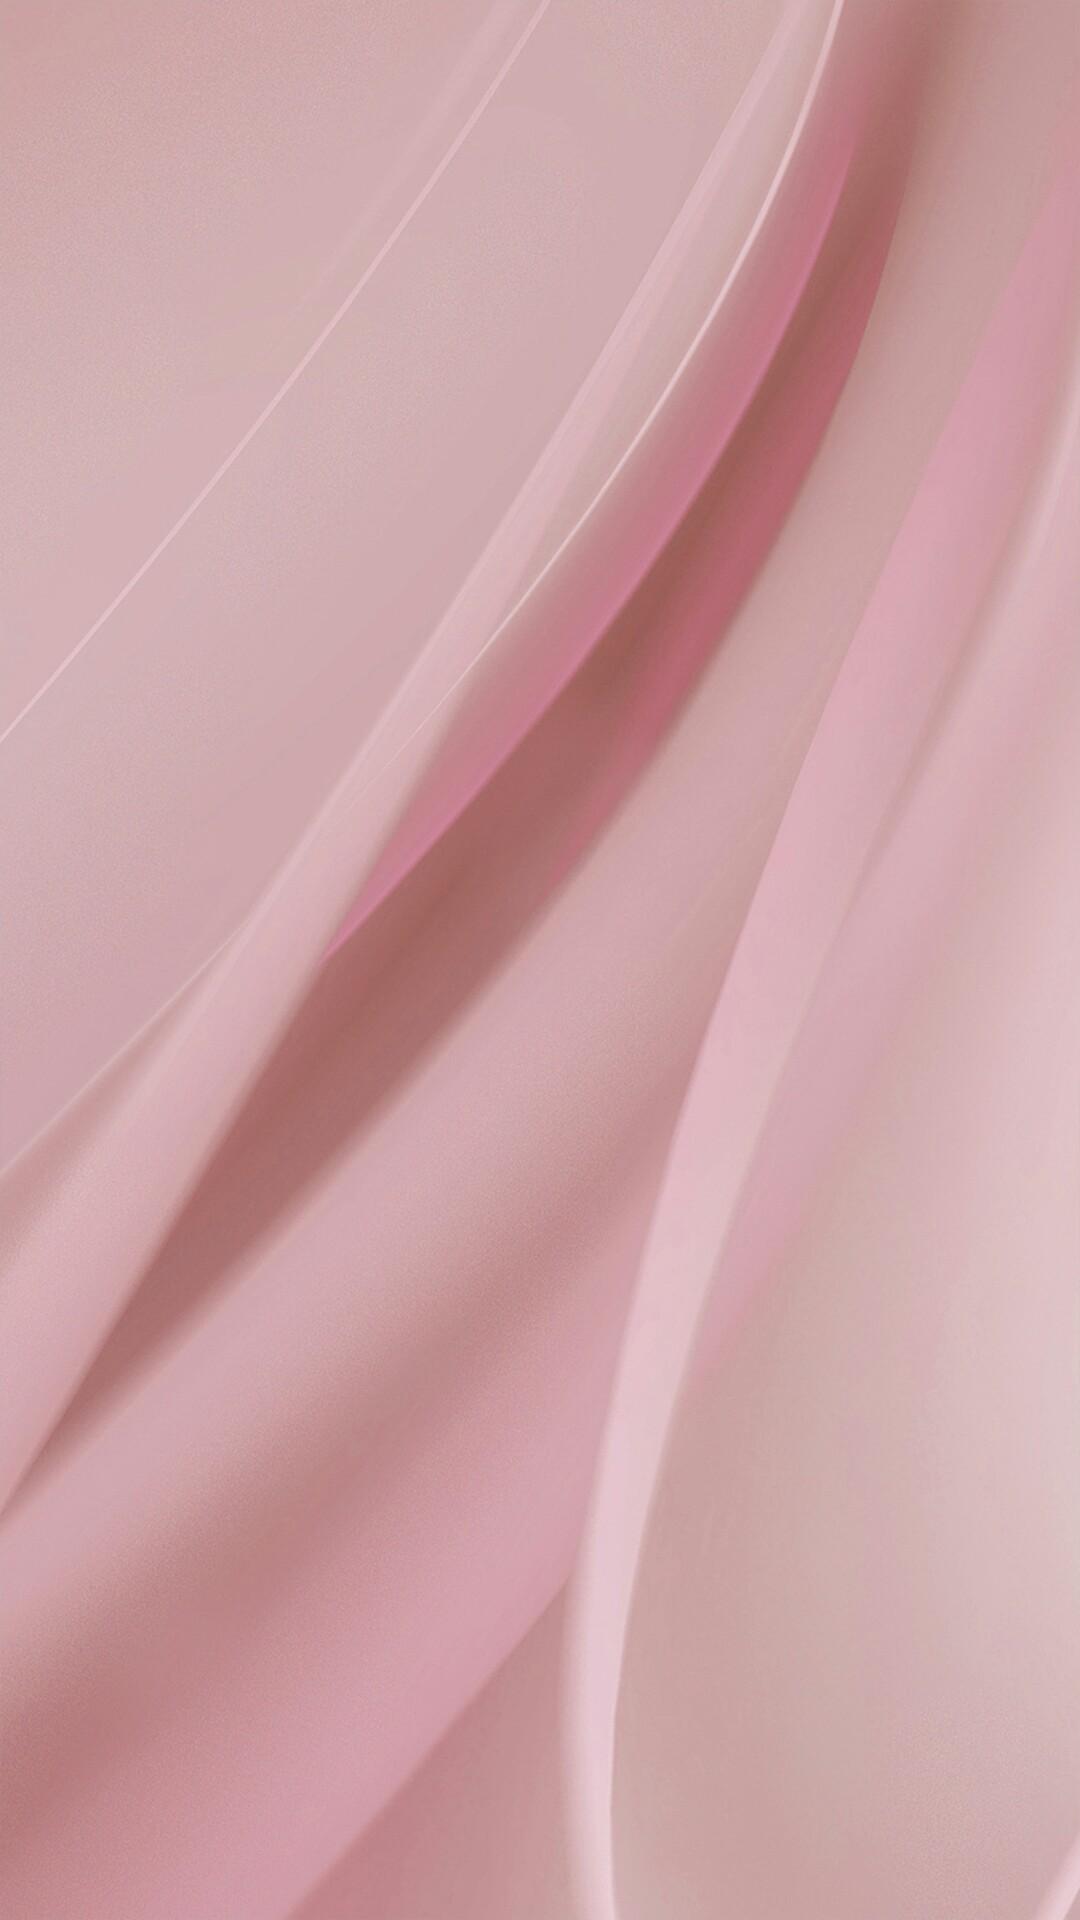 Pink Phone Wallpaper